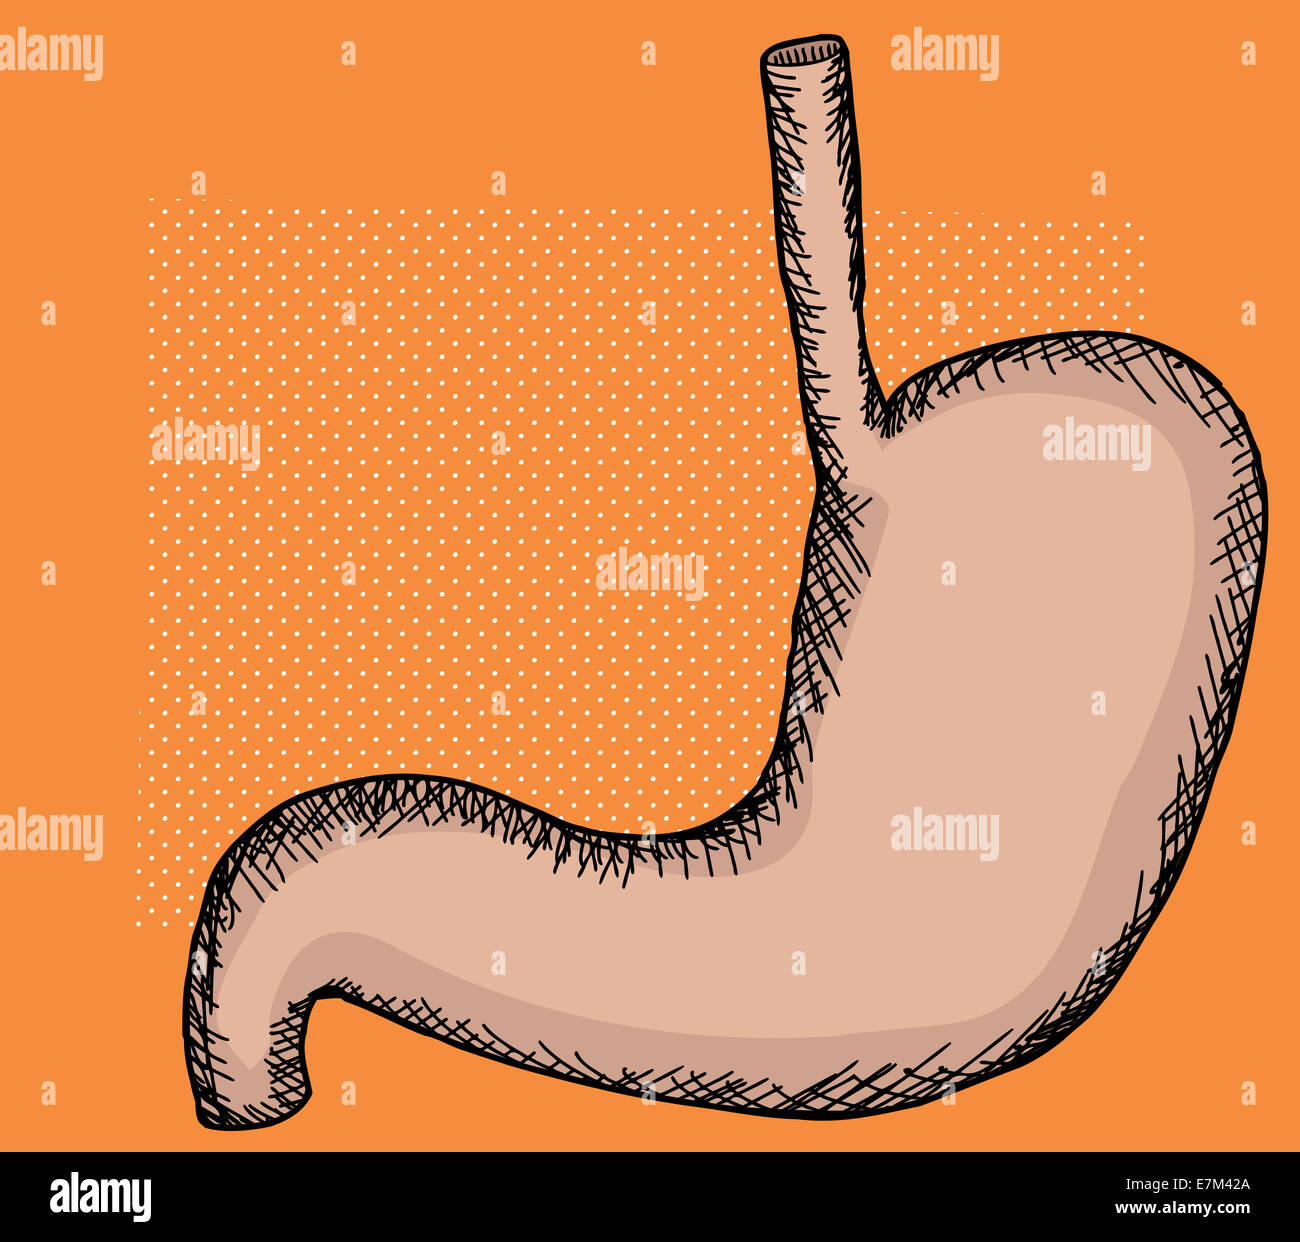 Single human stomach organ cartoon over halftone Stock Photo